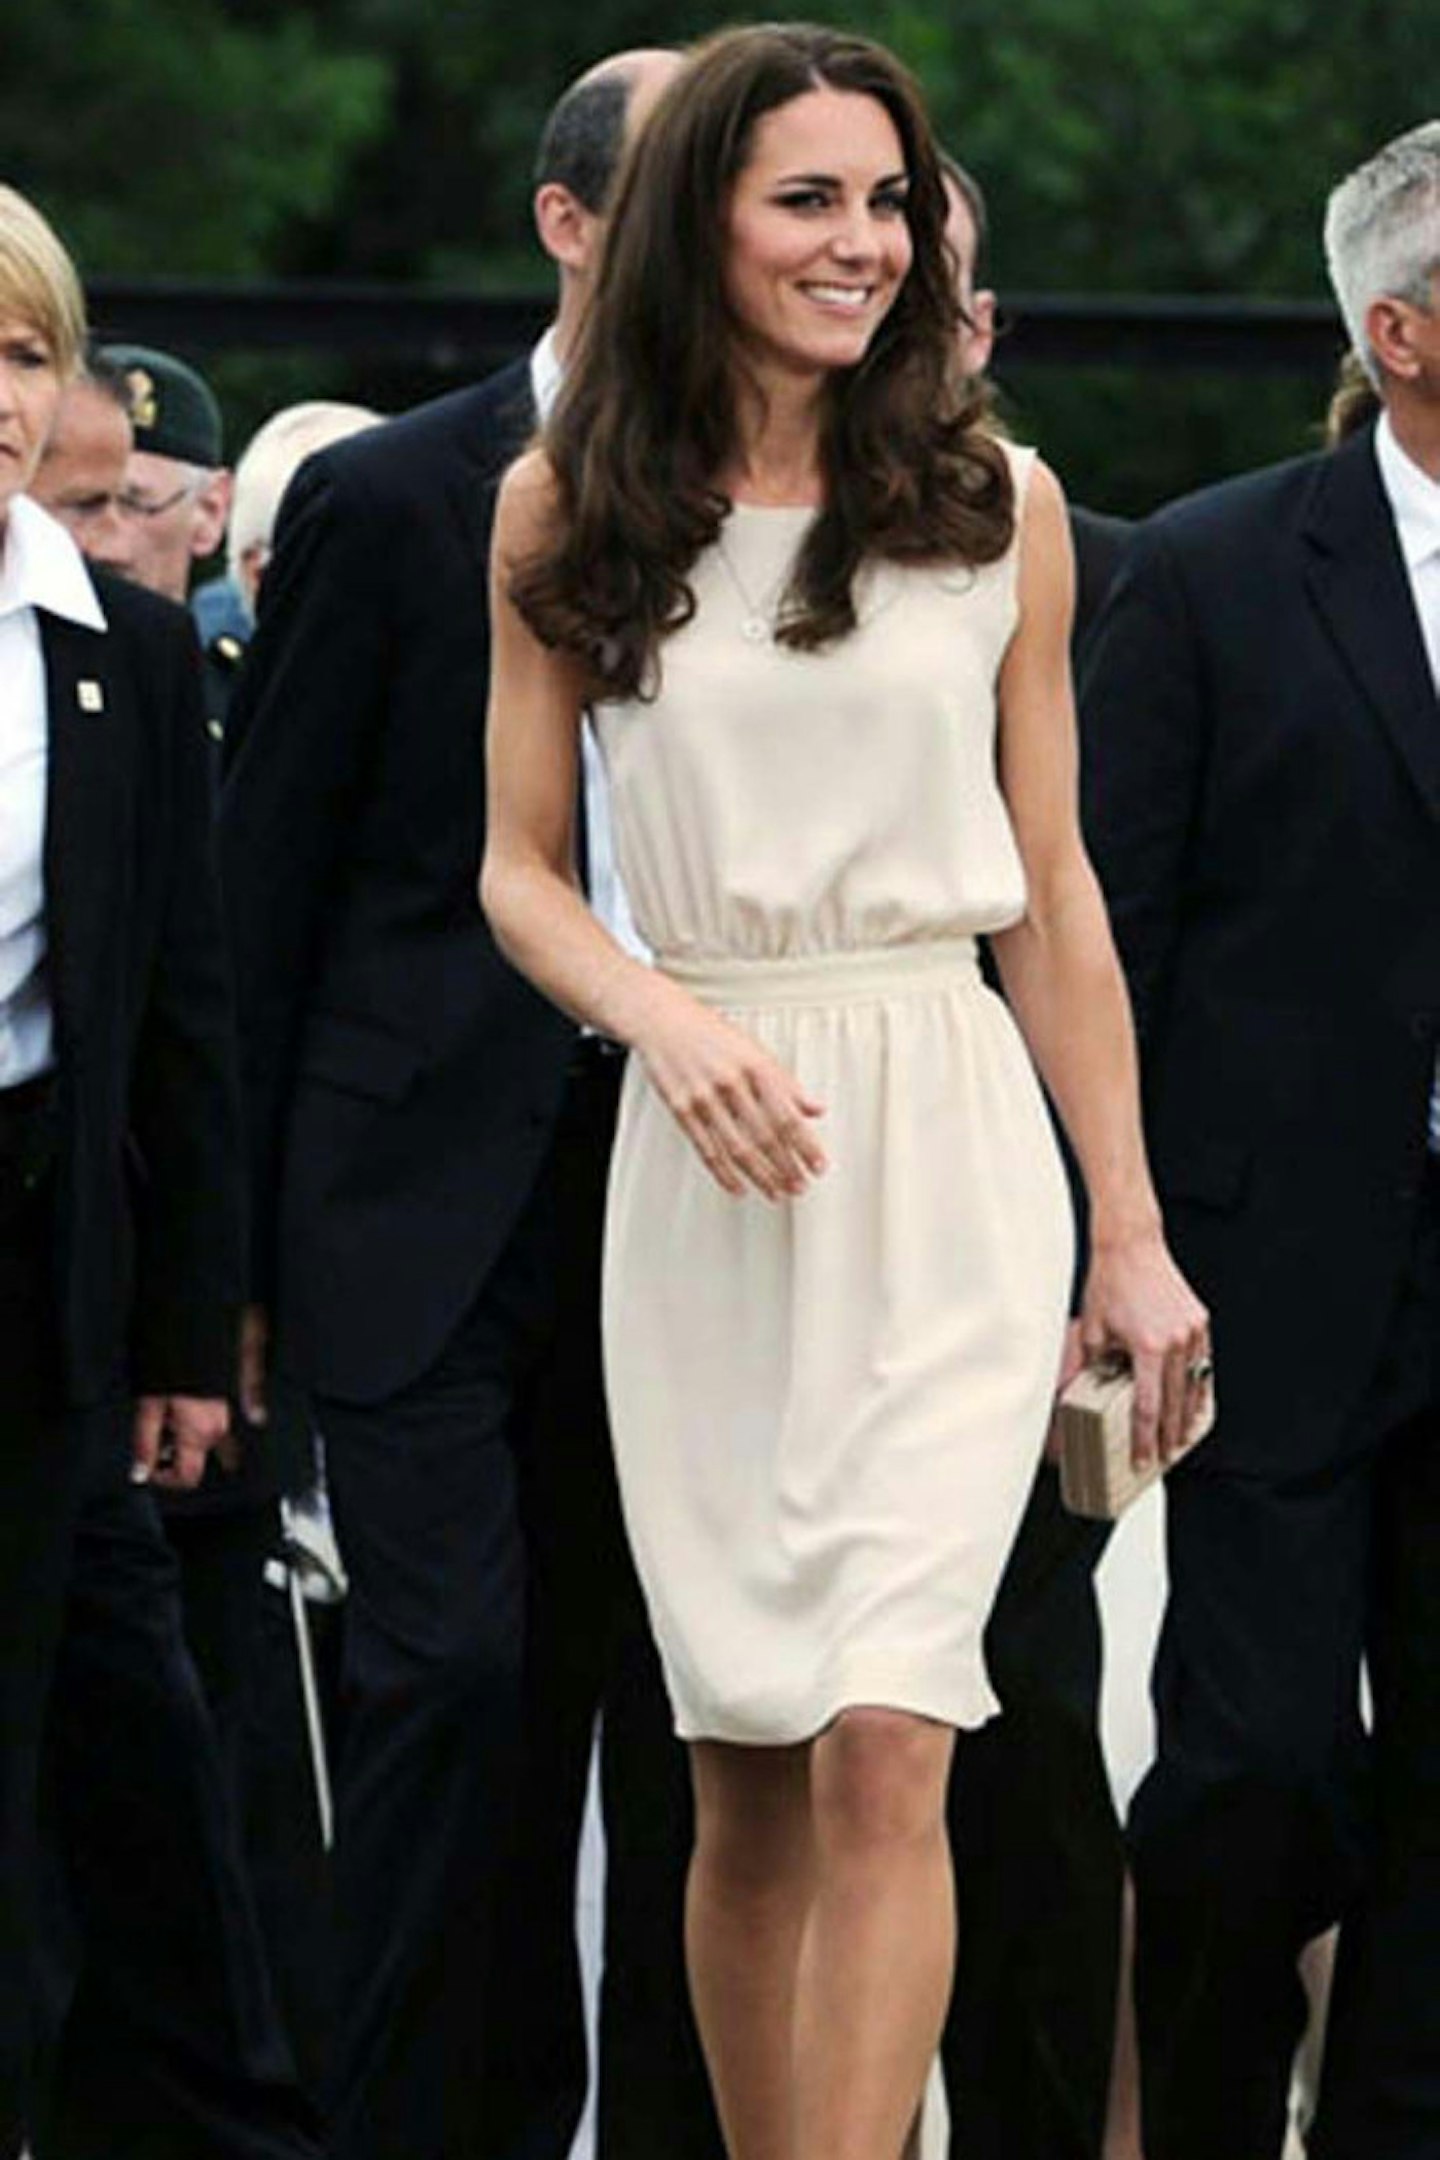 Kate Middleton departs Jean Lesage International Airport in Quebec City wearing Joseph dress, July 2011